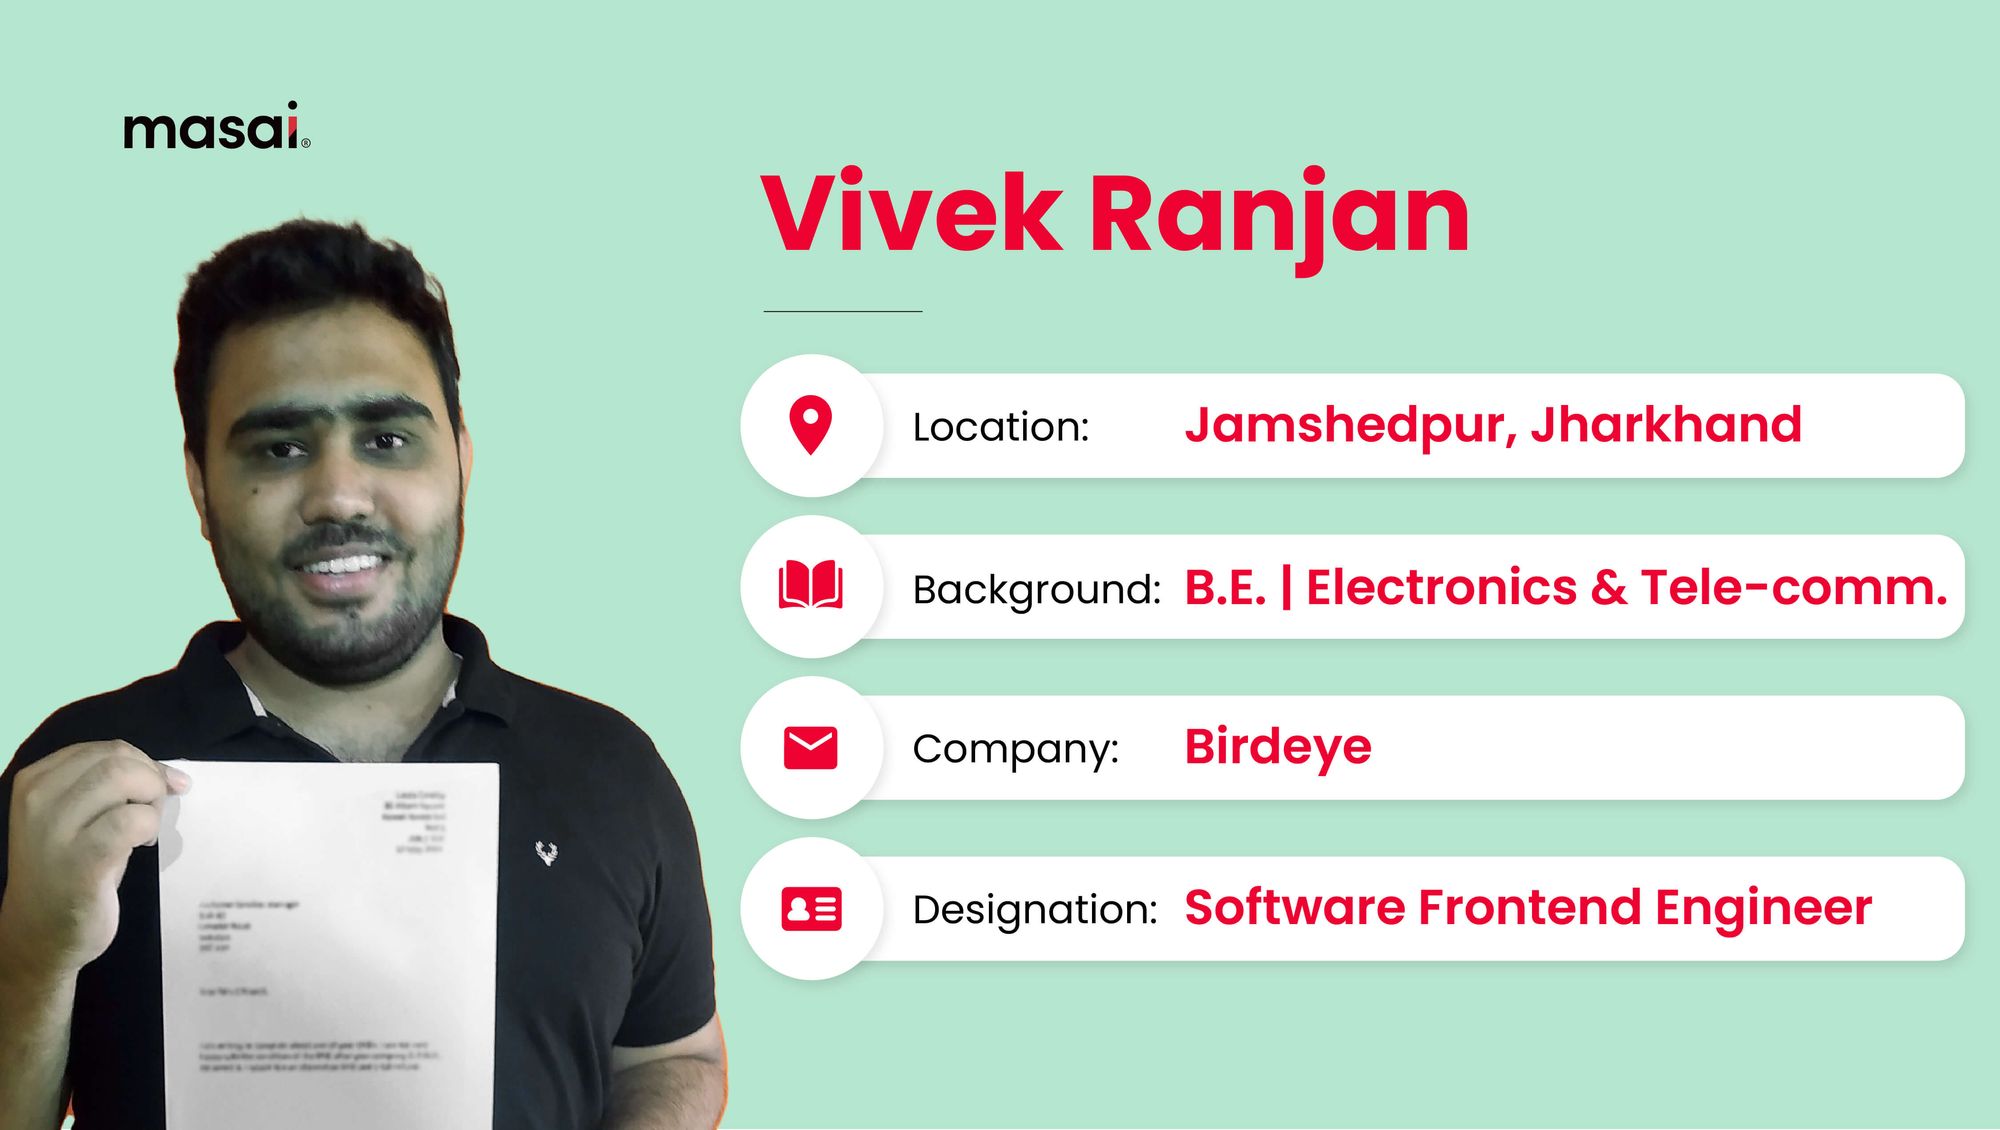 Vivek Ranjan - A Masai graduate now working as Software Engineer at Birdeye